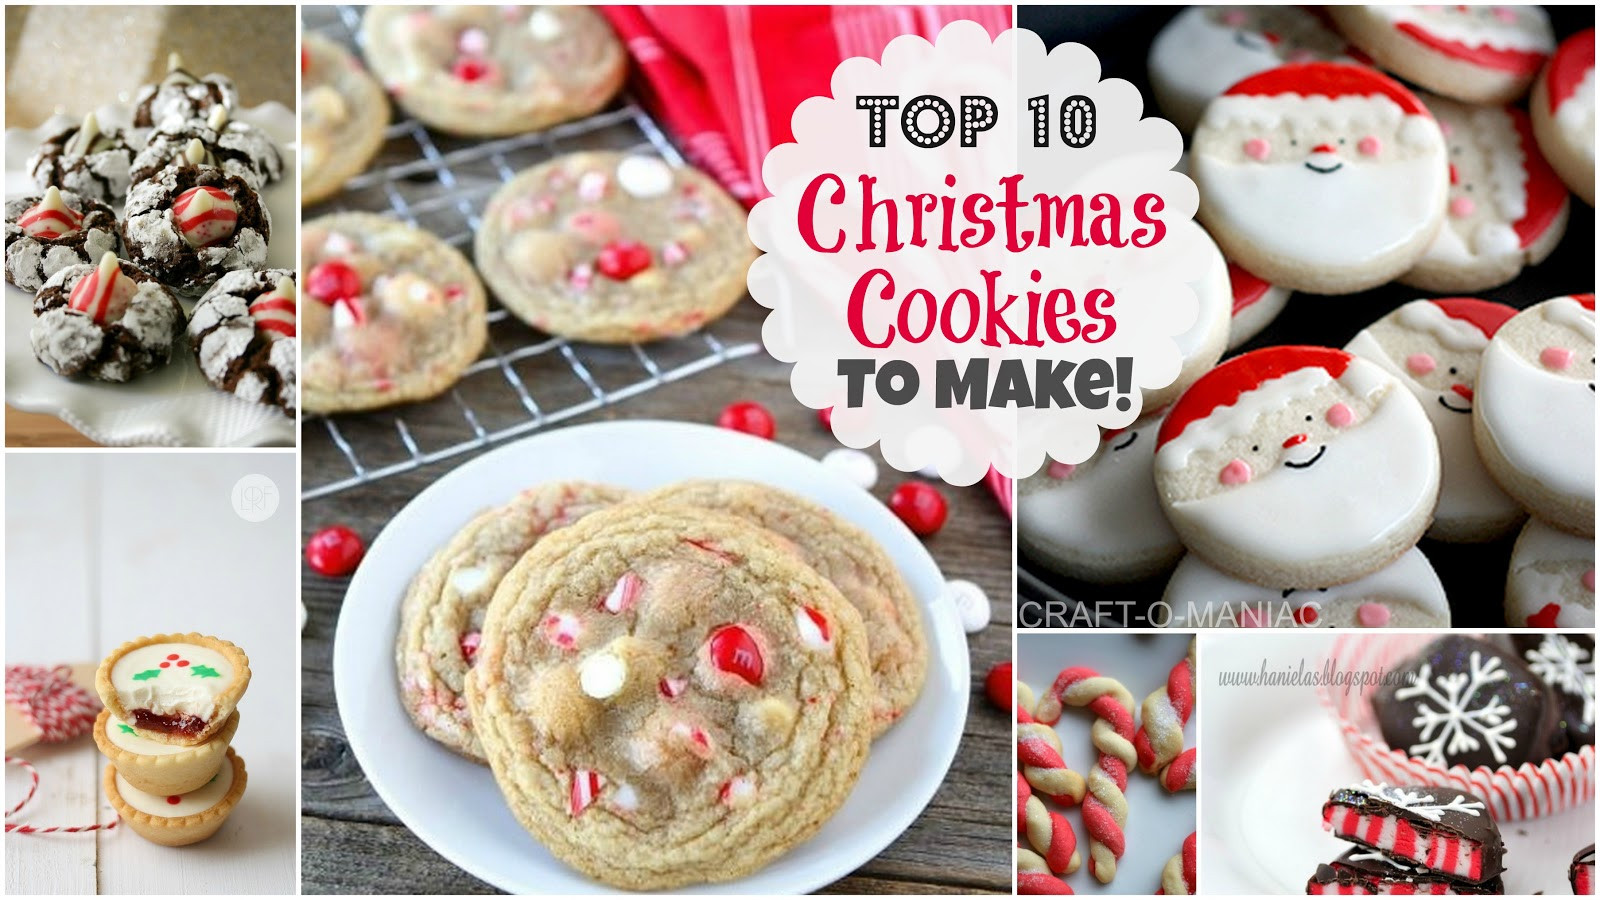 Top Ten Christmas Cookies
 Top 10 Christmas Cookies to Make Craft O Maniac